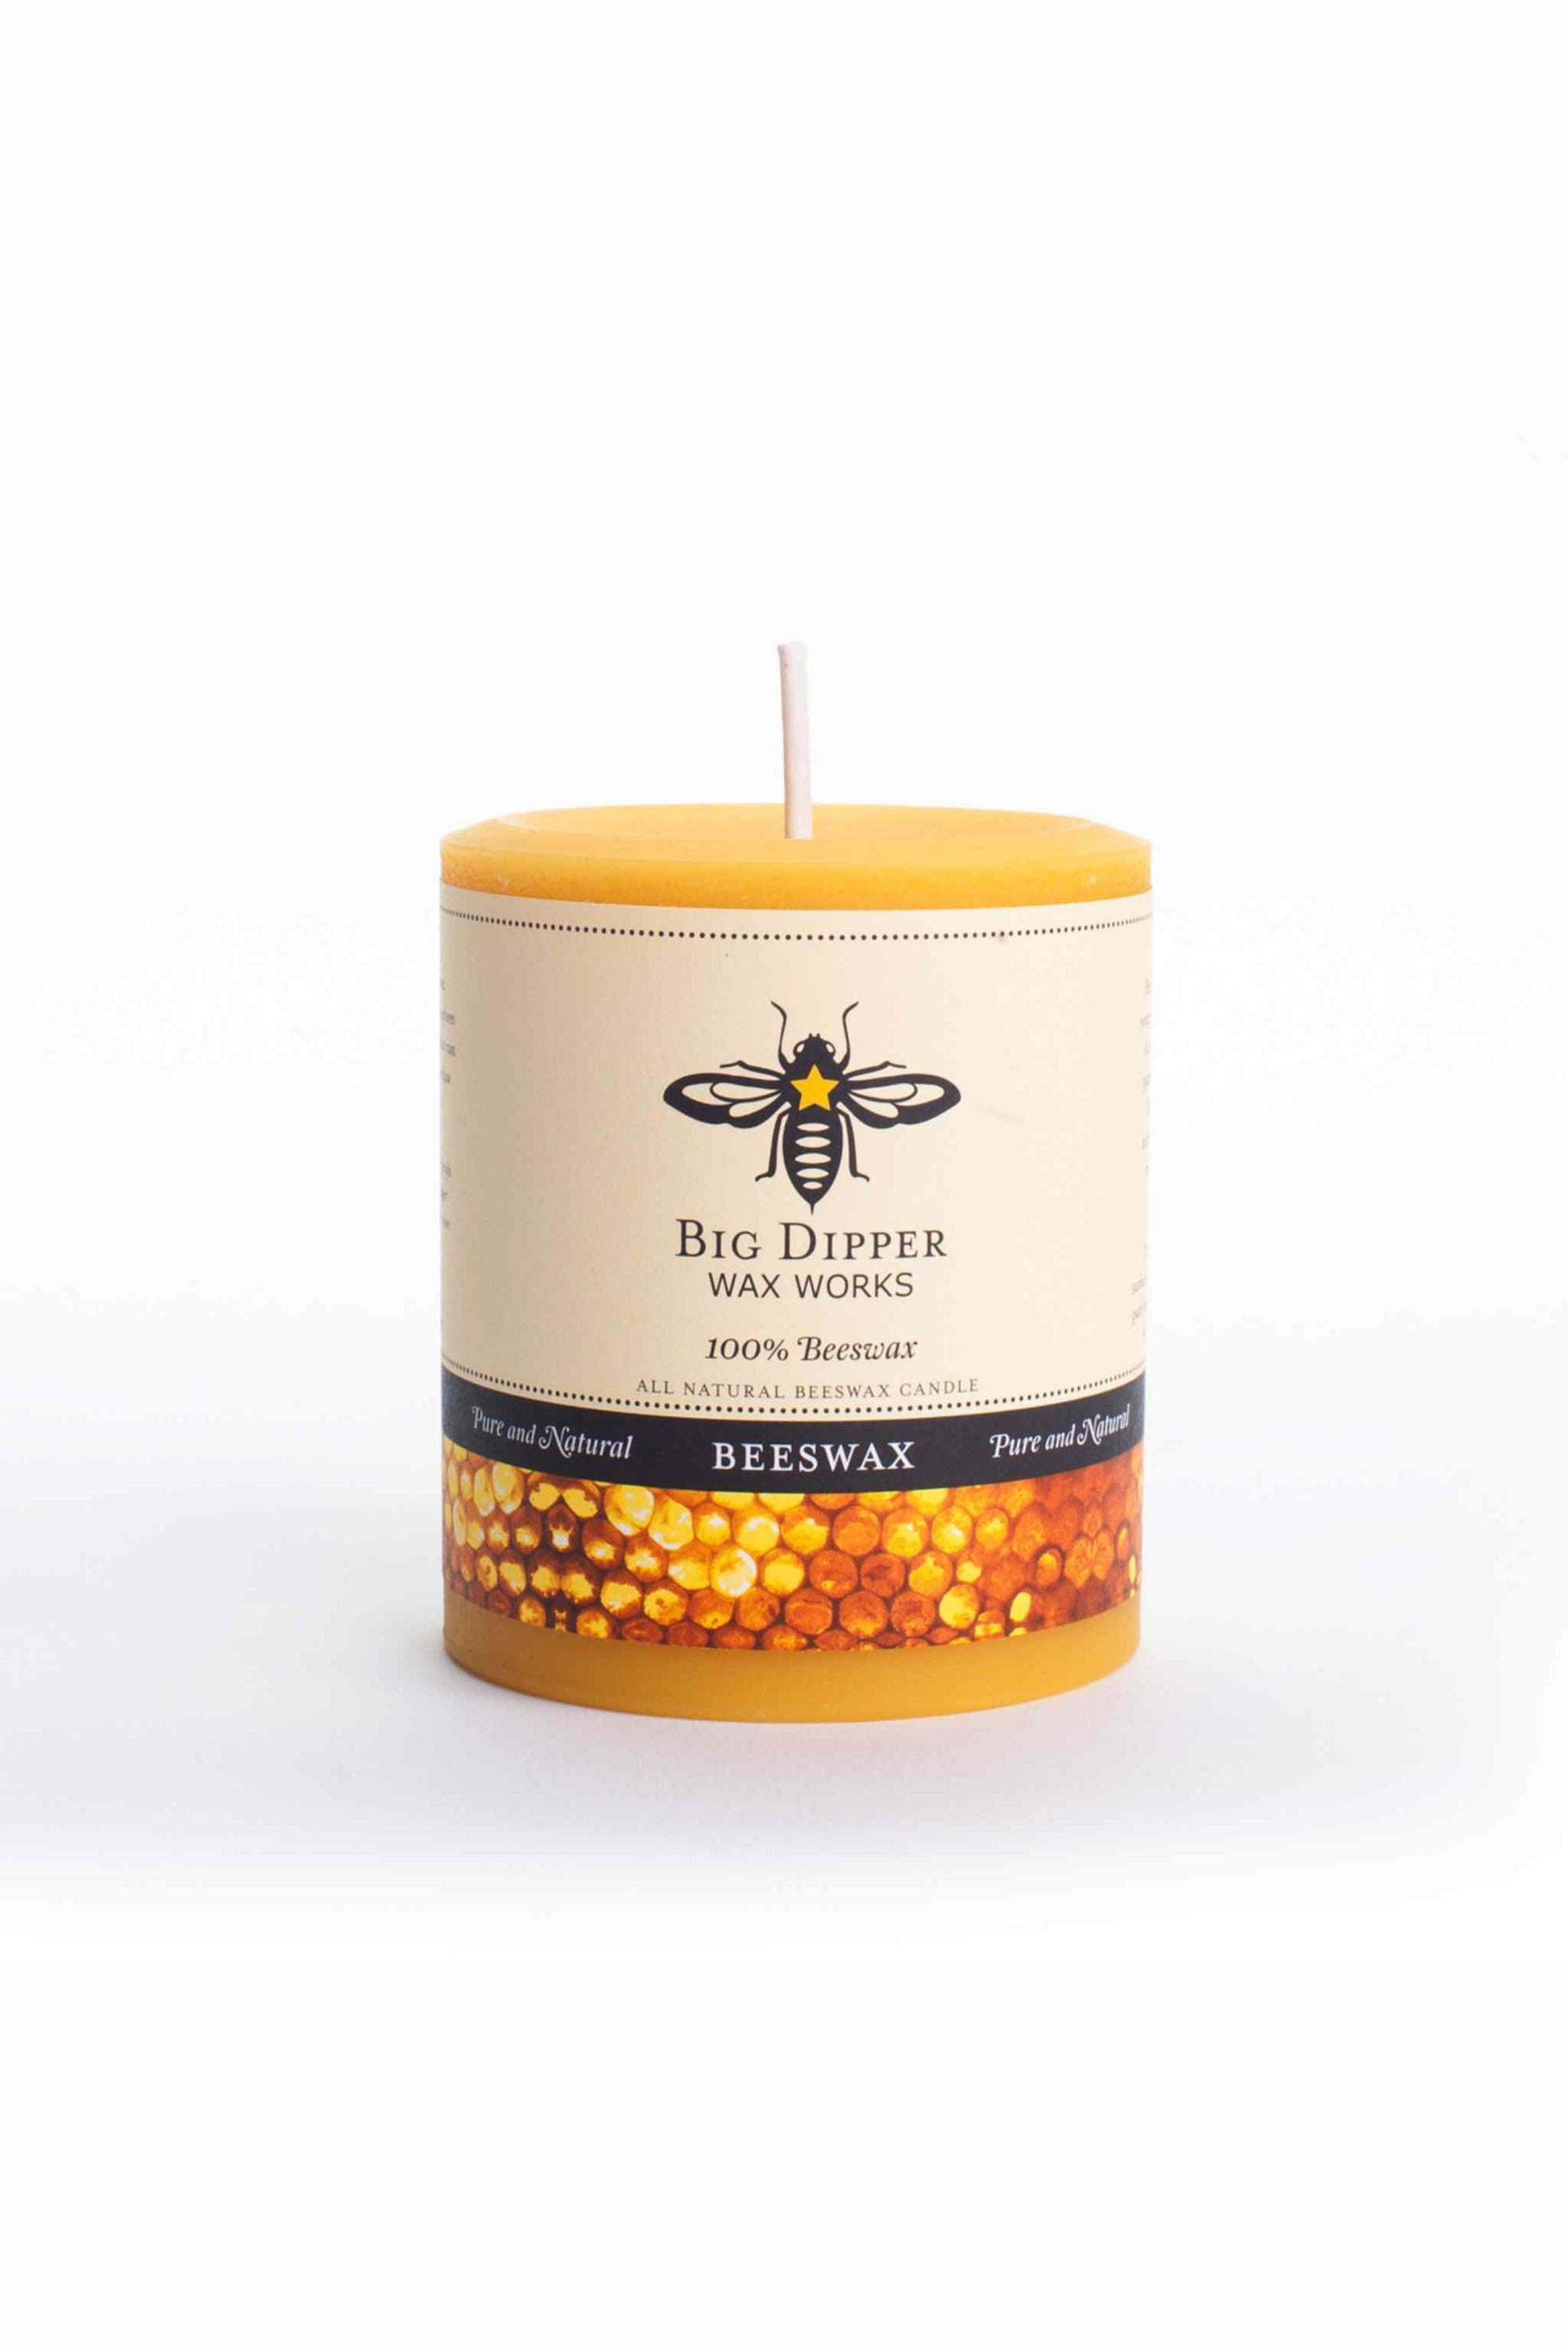 100% Pure Organic Beeswax Candles – Savannah Bee Company